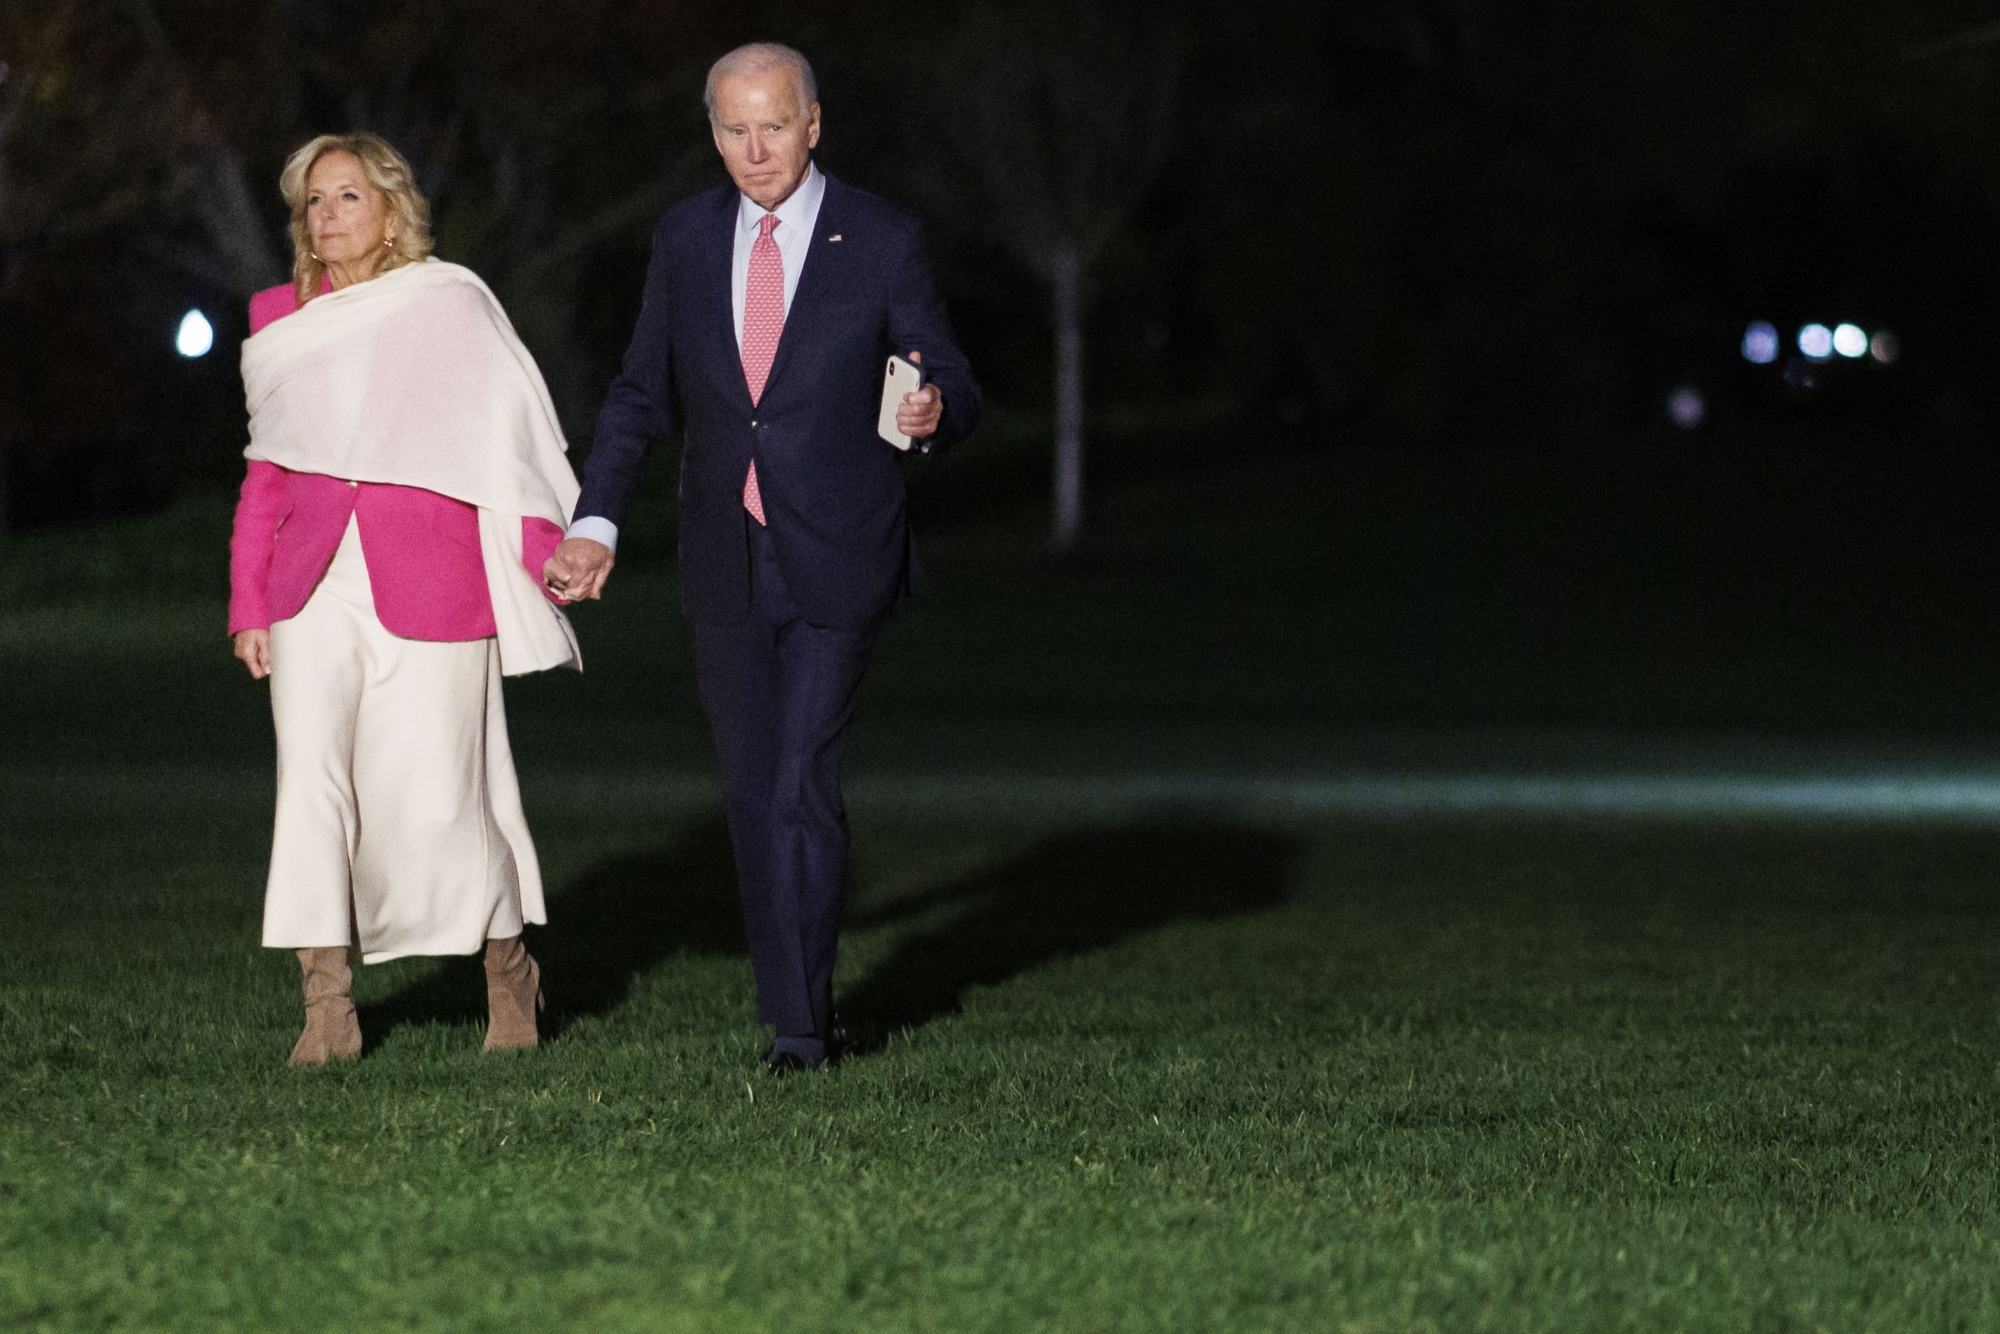 Jill Biden wears a giant white scarf over a pink blazer while holding hands with Joe Biden